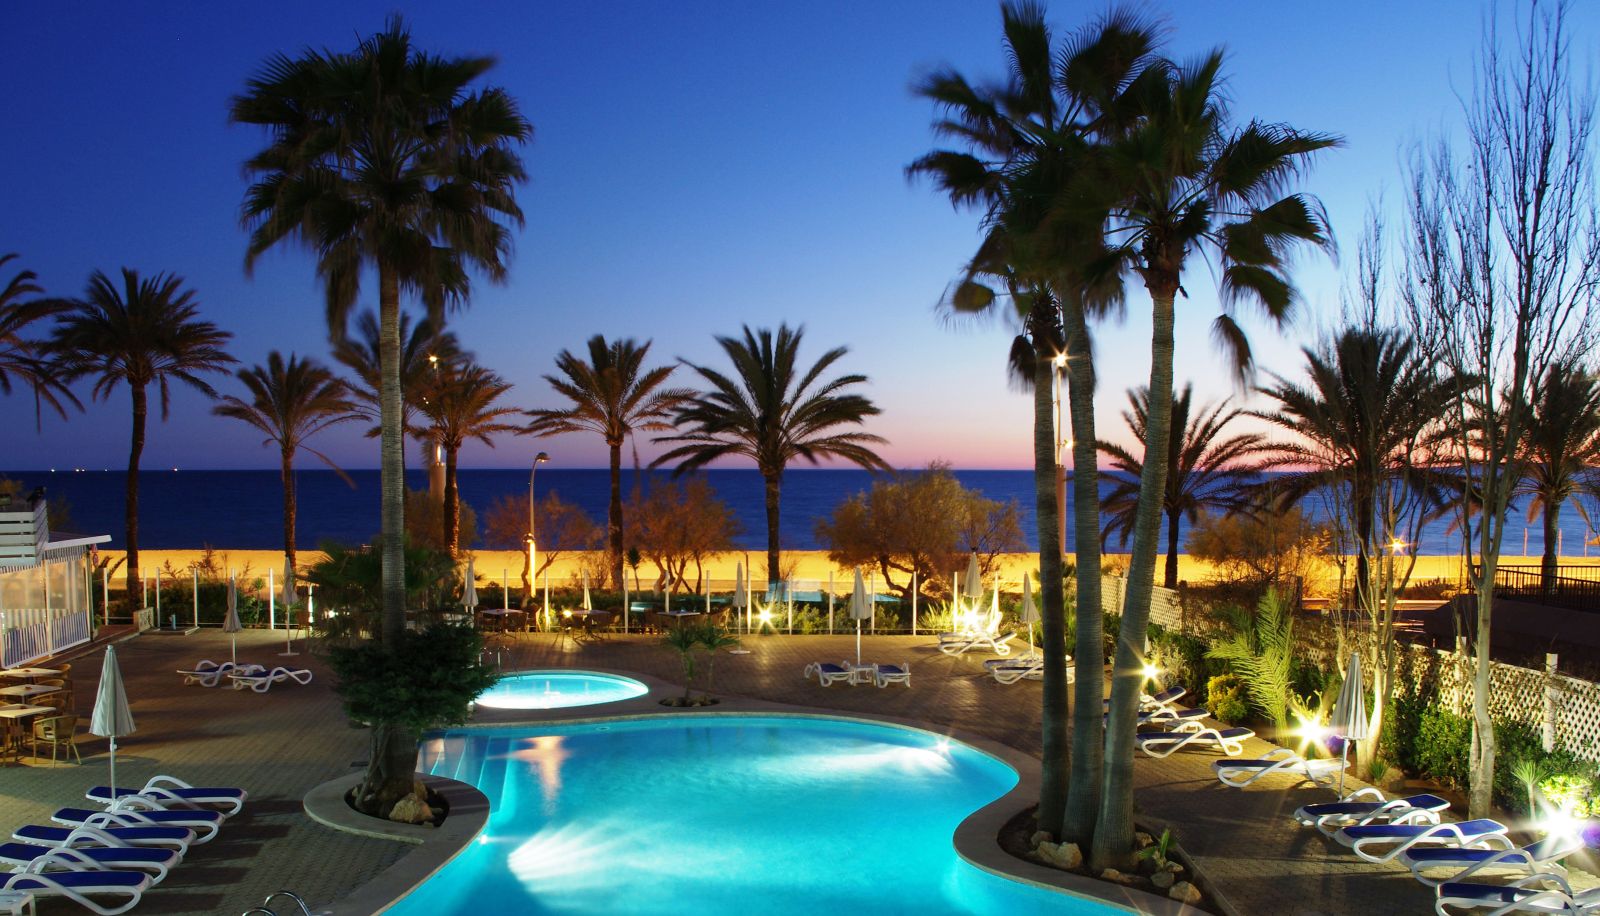 Hotel HSM Golden Playa - Palma de Majorque - HOTEL INFO